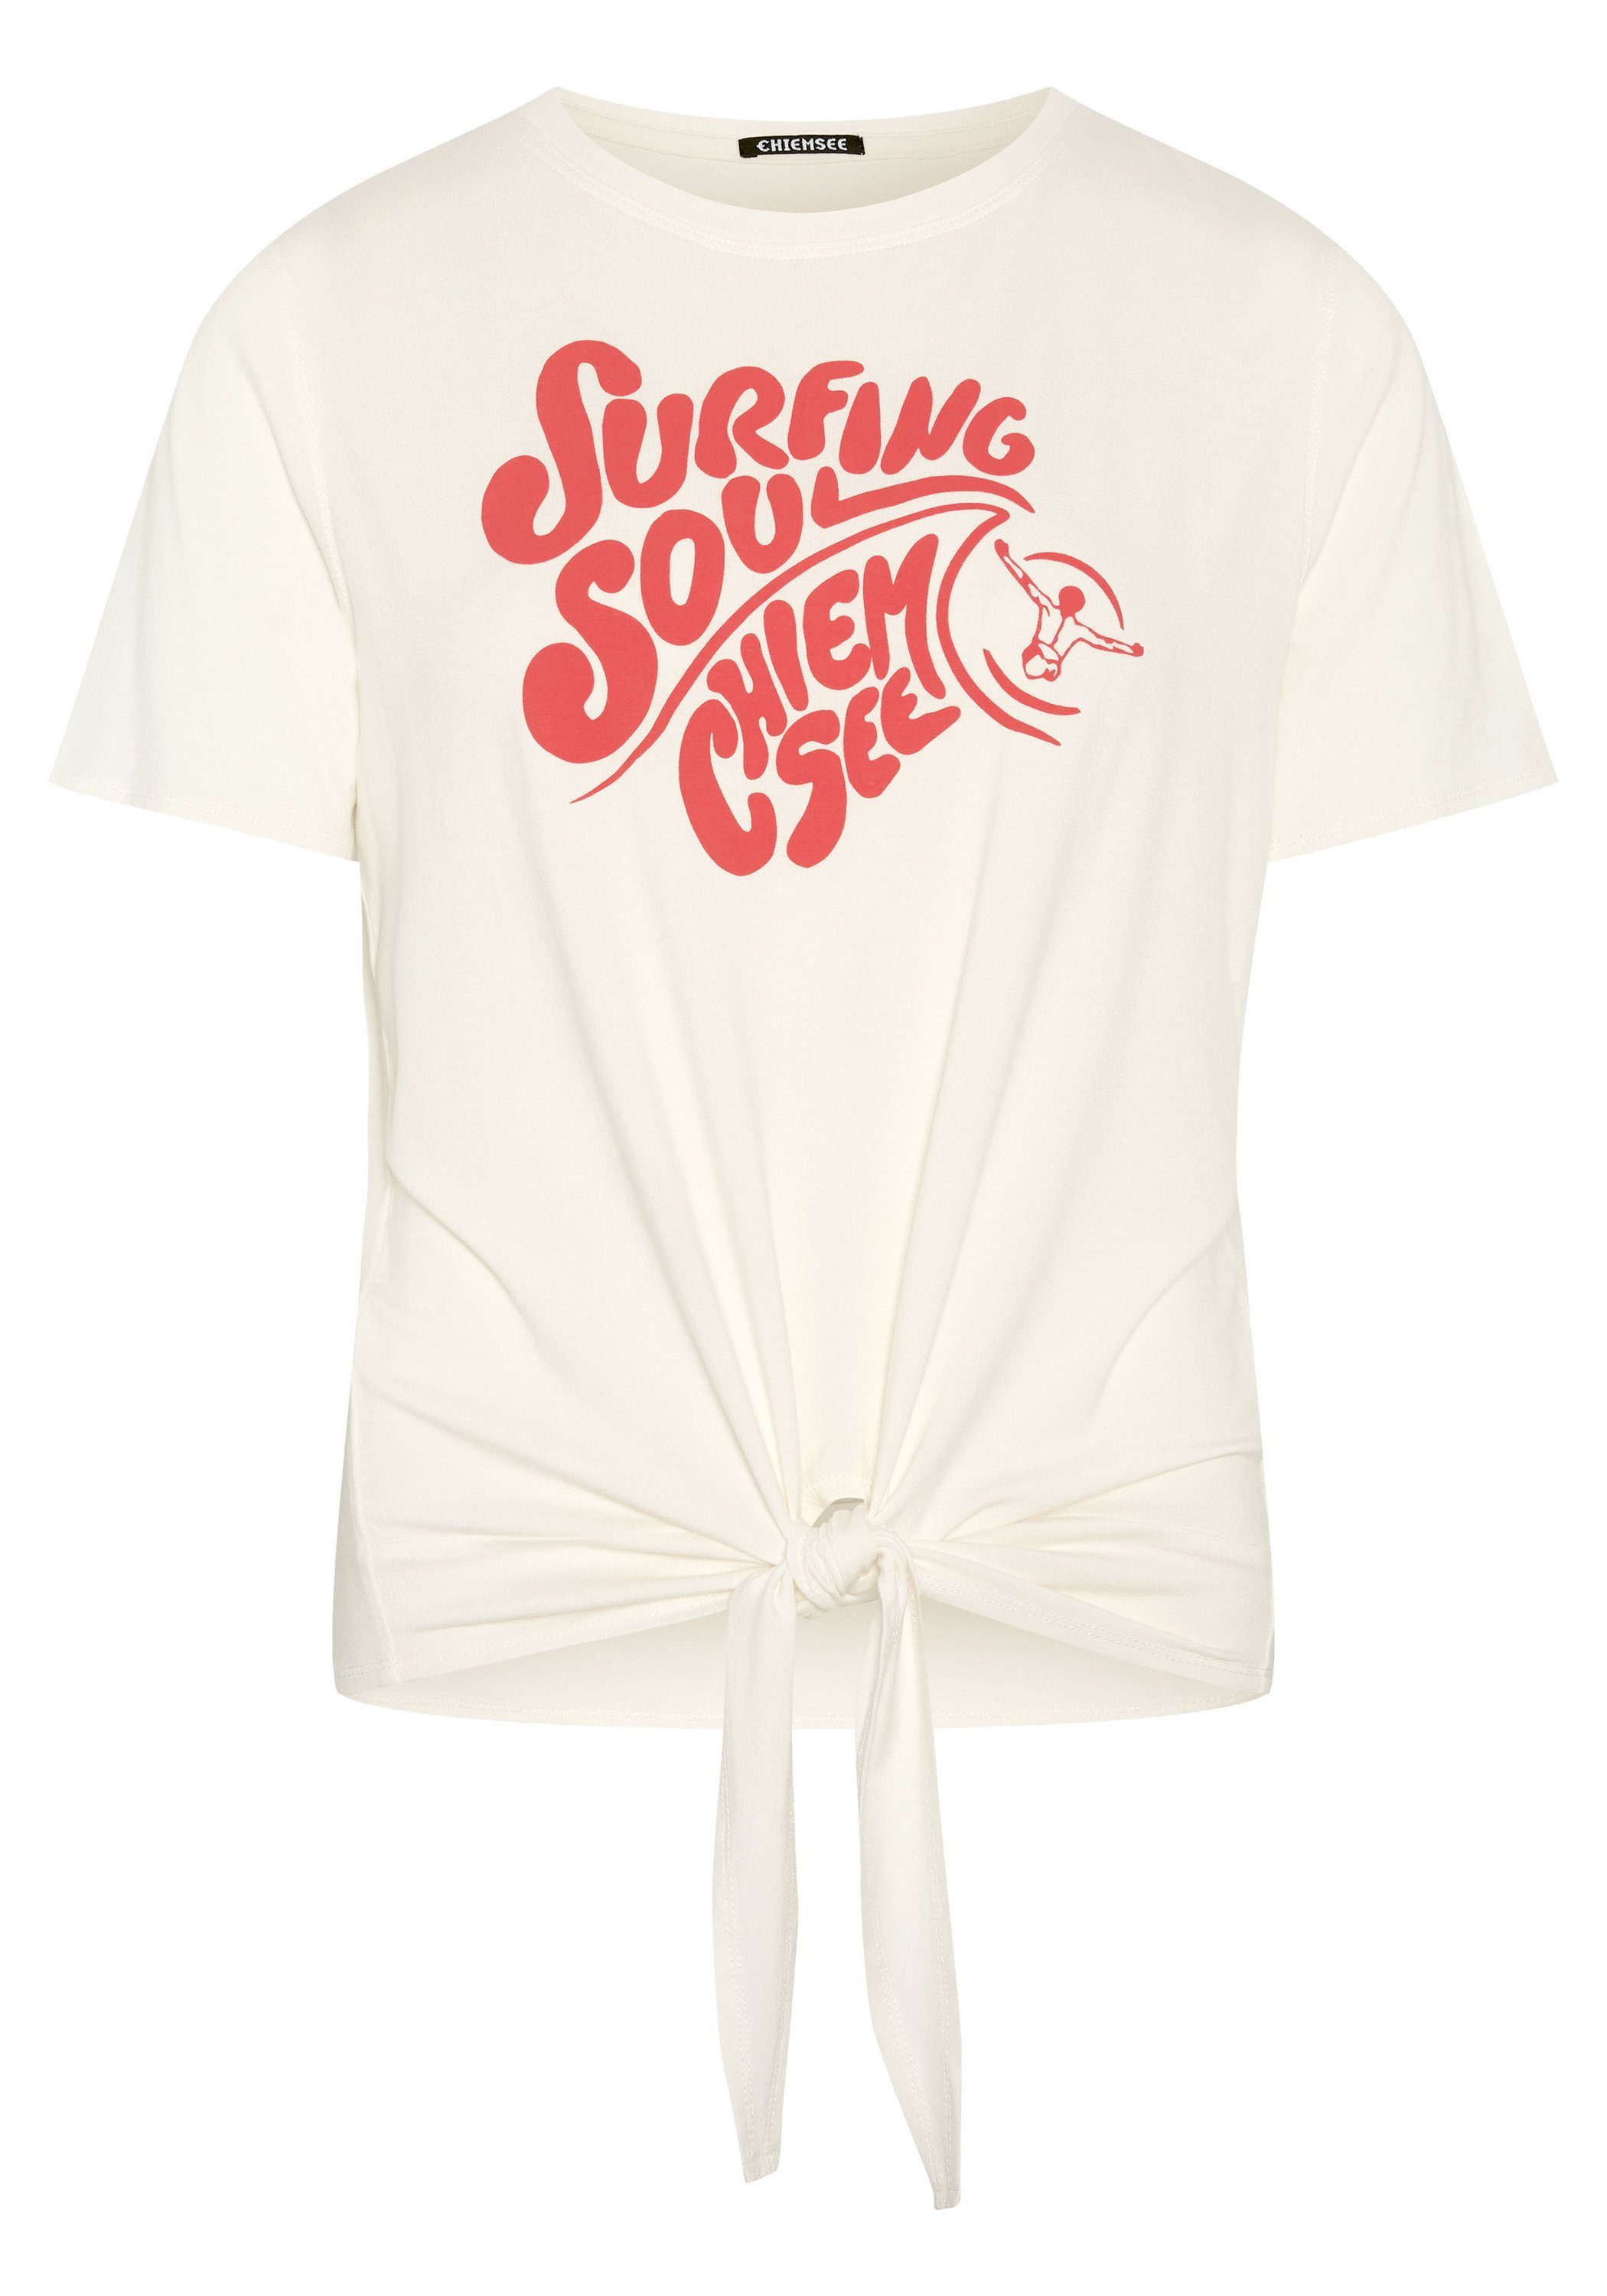 Chiemsee Print-Shirt gecropptes White 1 T-Shirt Knoten Star mit Saum zum 11-4202